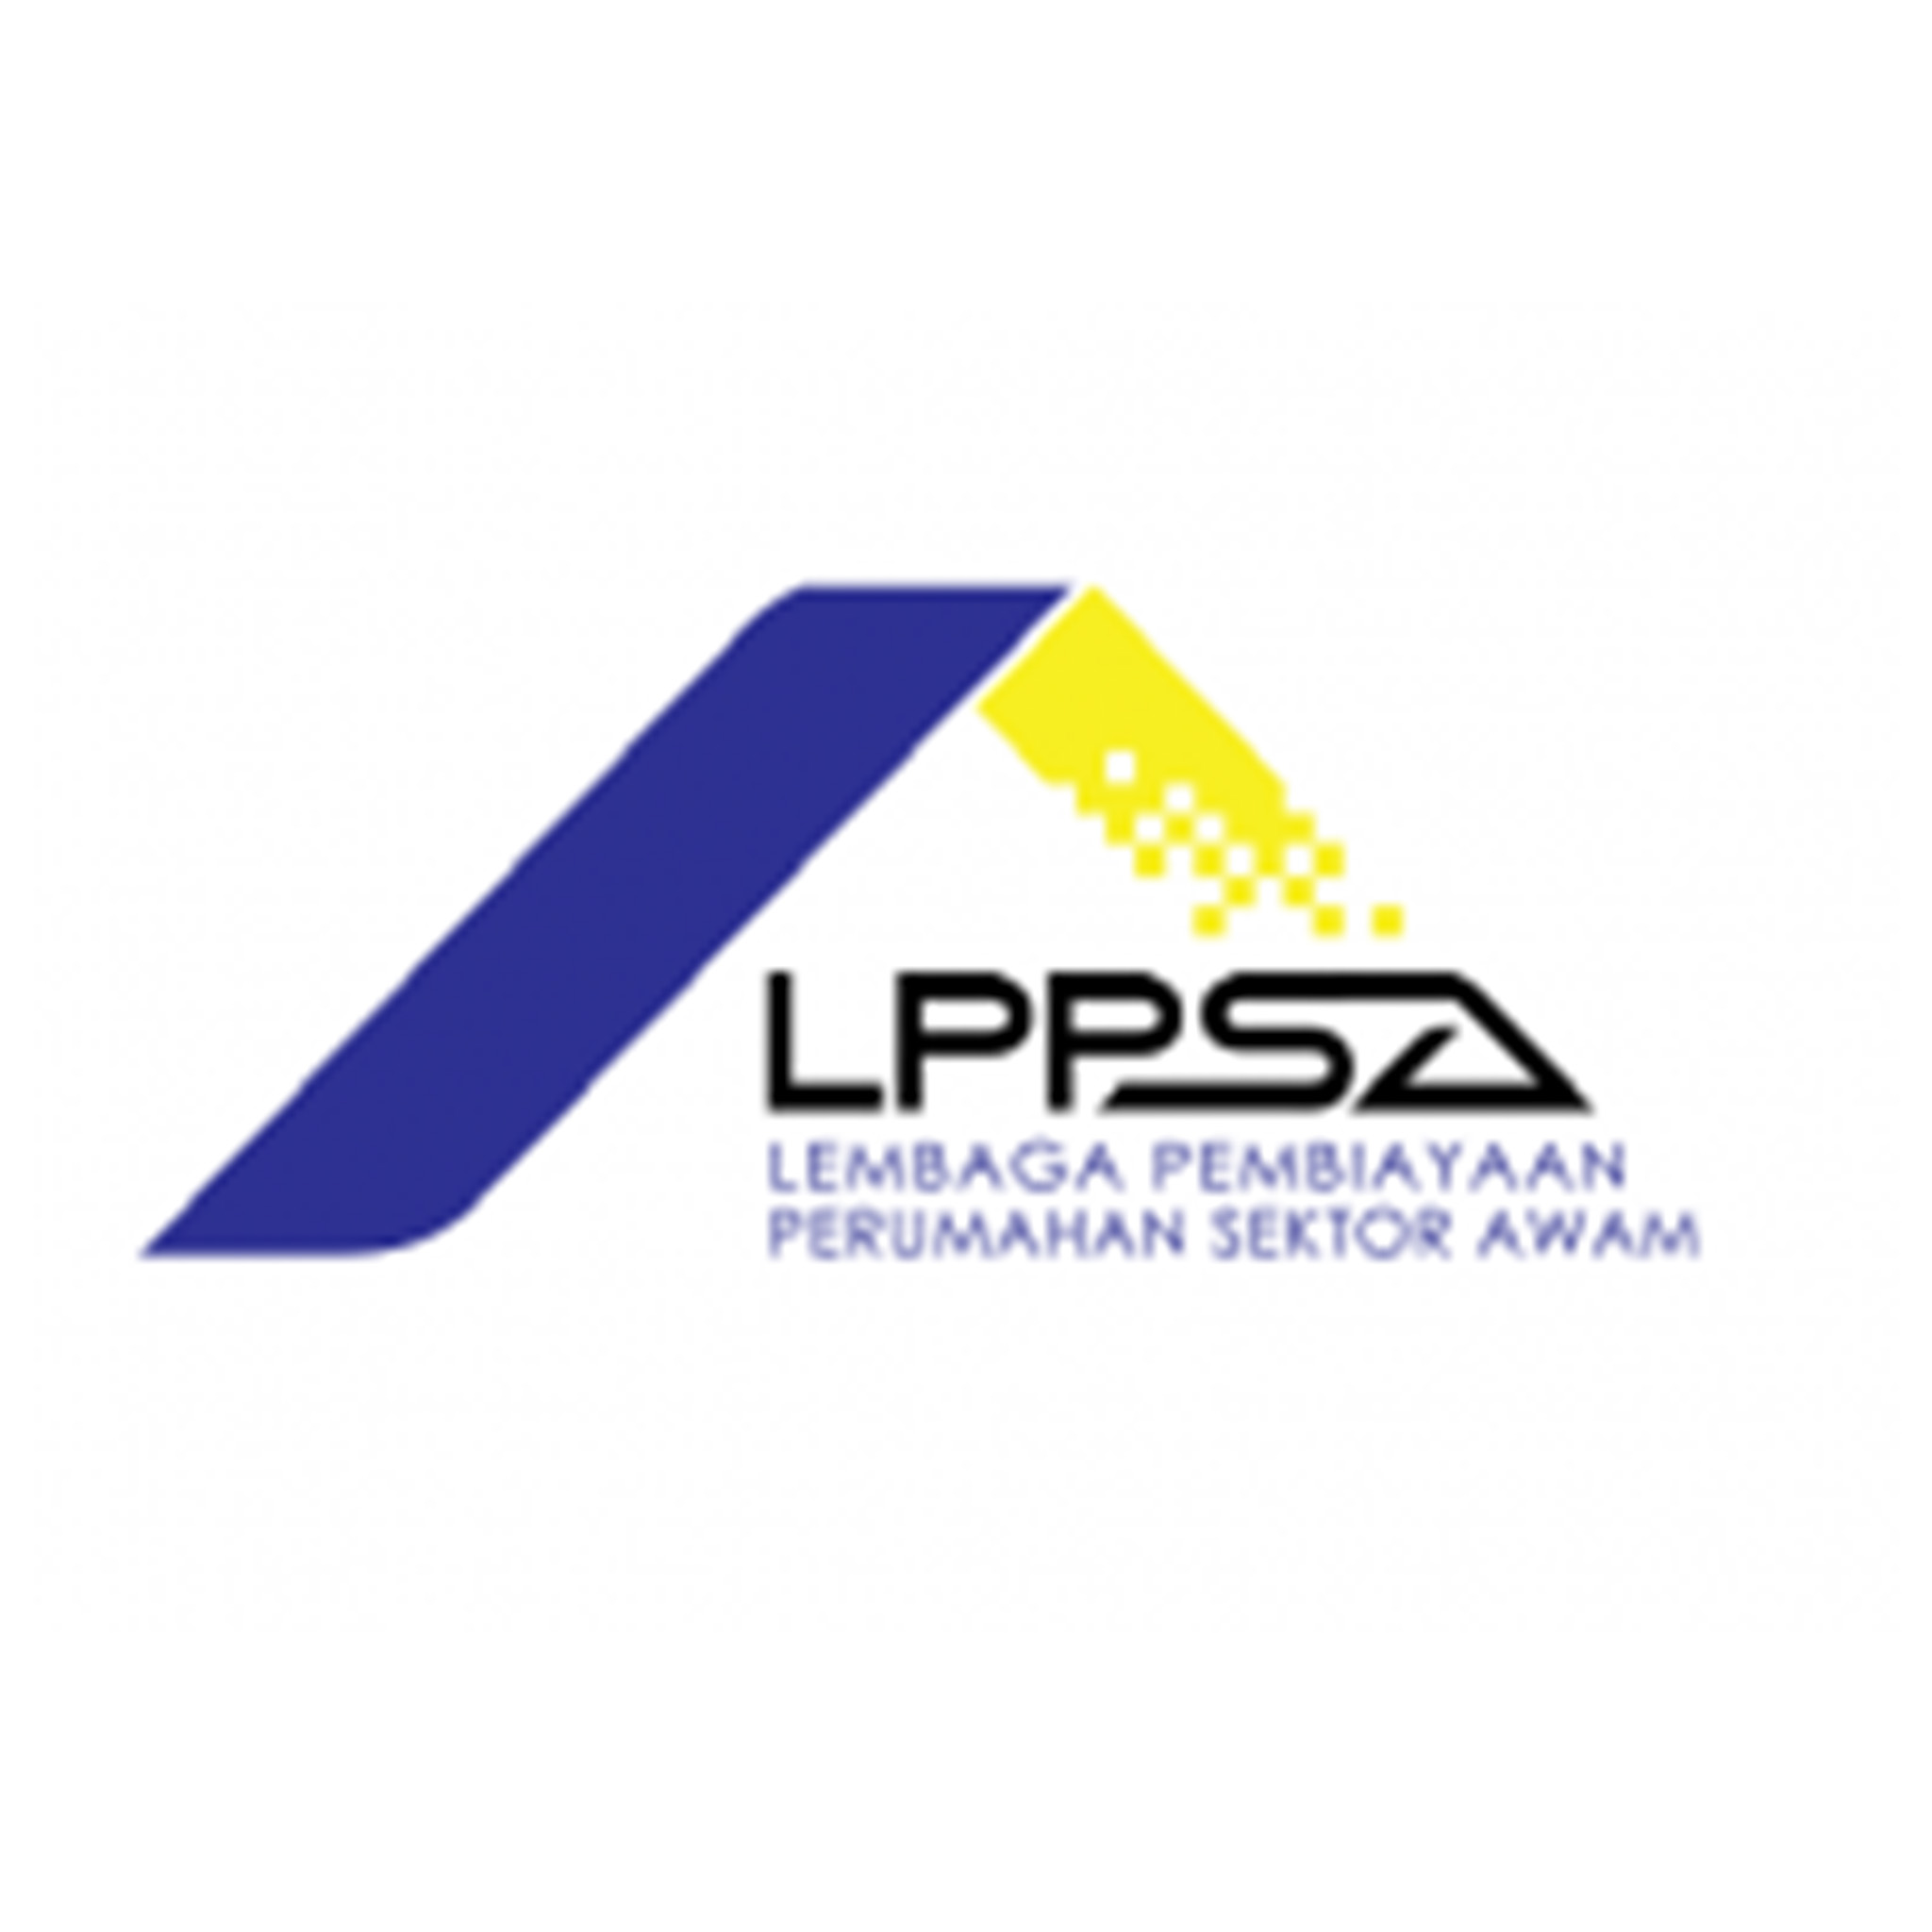 Public Sector Home Financing Board (LPPSA) - LOGO